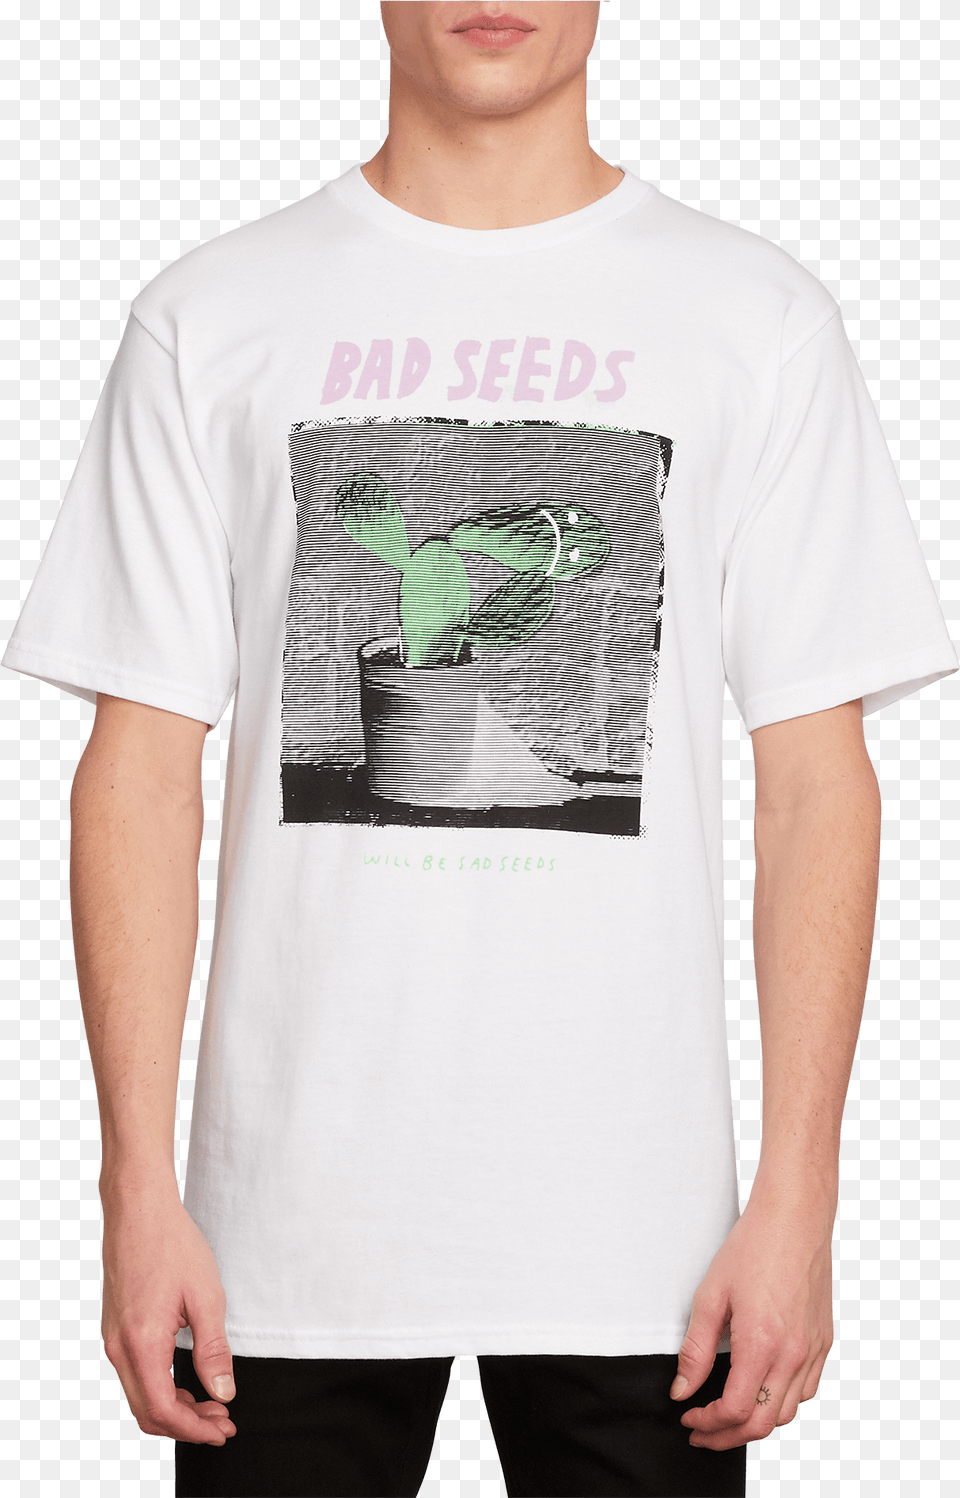 Sad Seeds Ss Tee Volcom Black Seeds, Clothing, T-shirt, Shirt Png Image